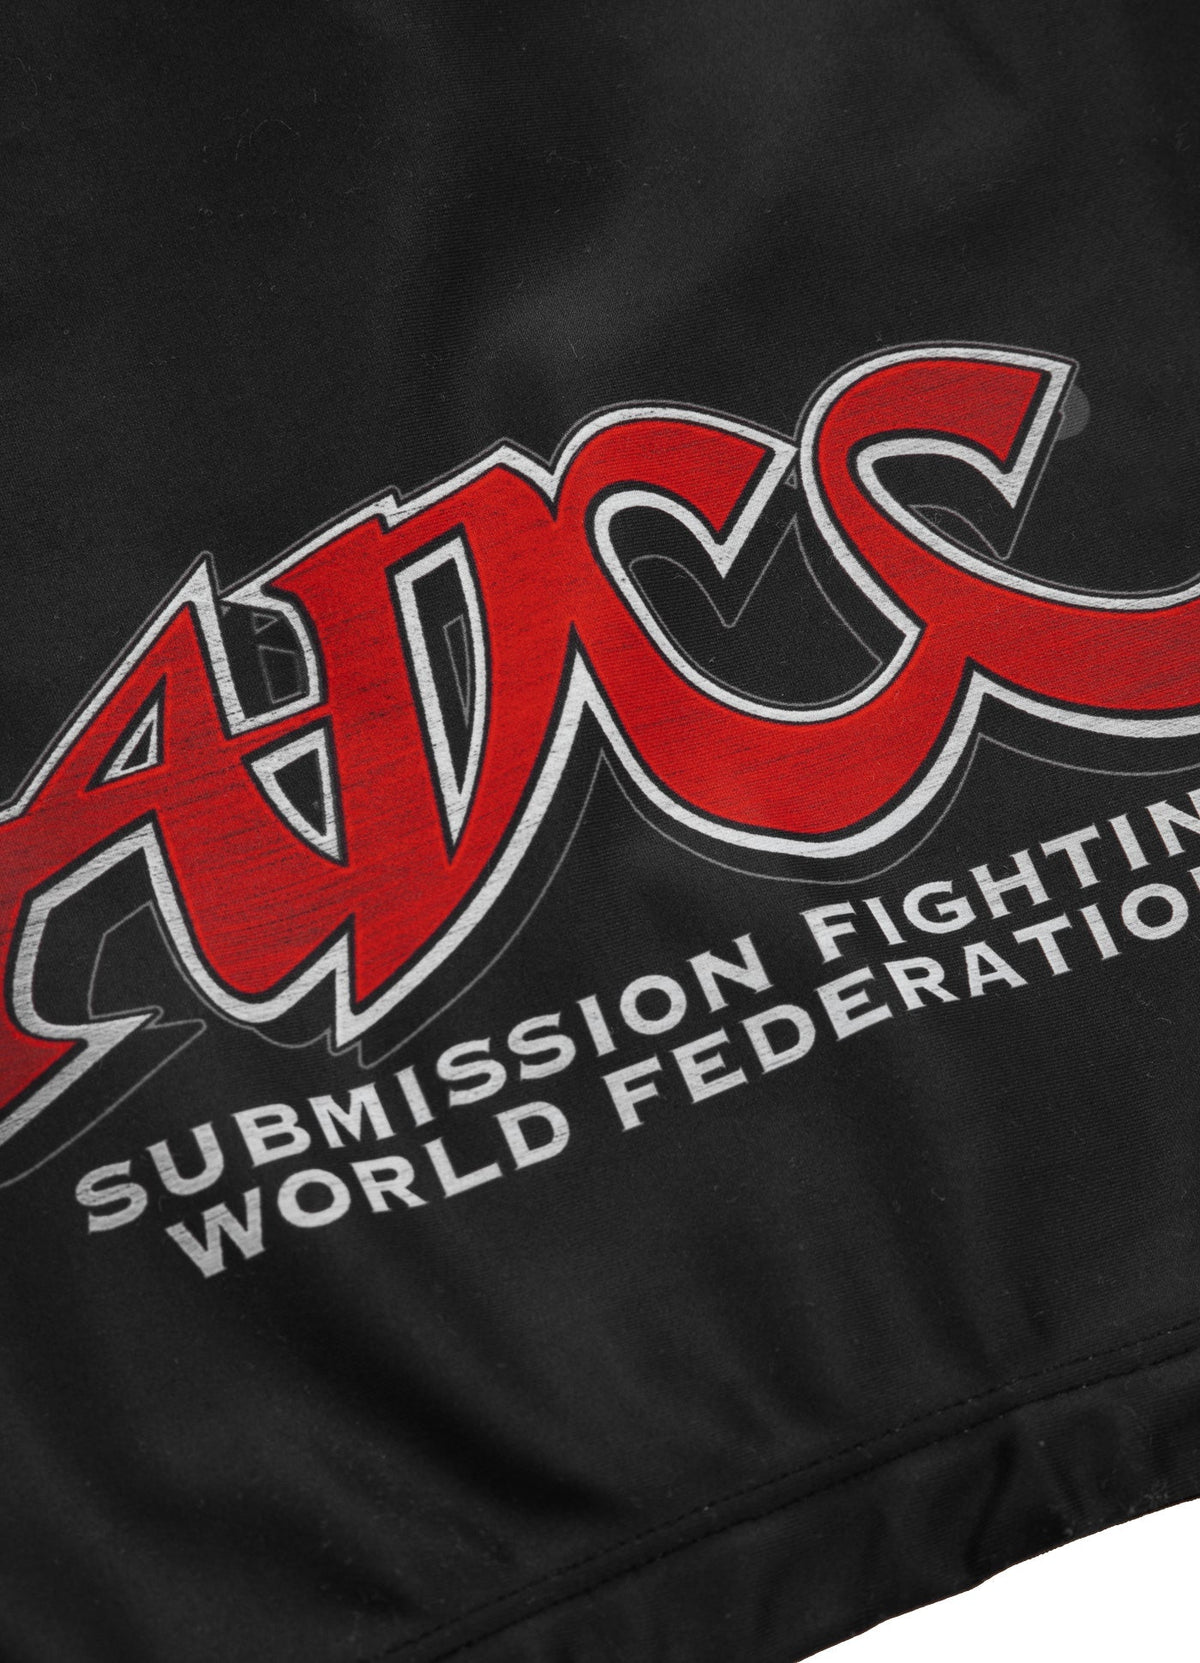 ADCC 2 Black Compression Shorts.